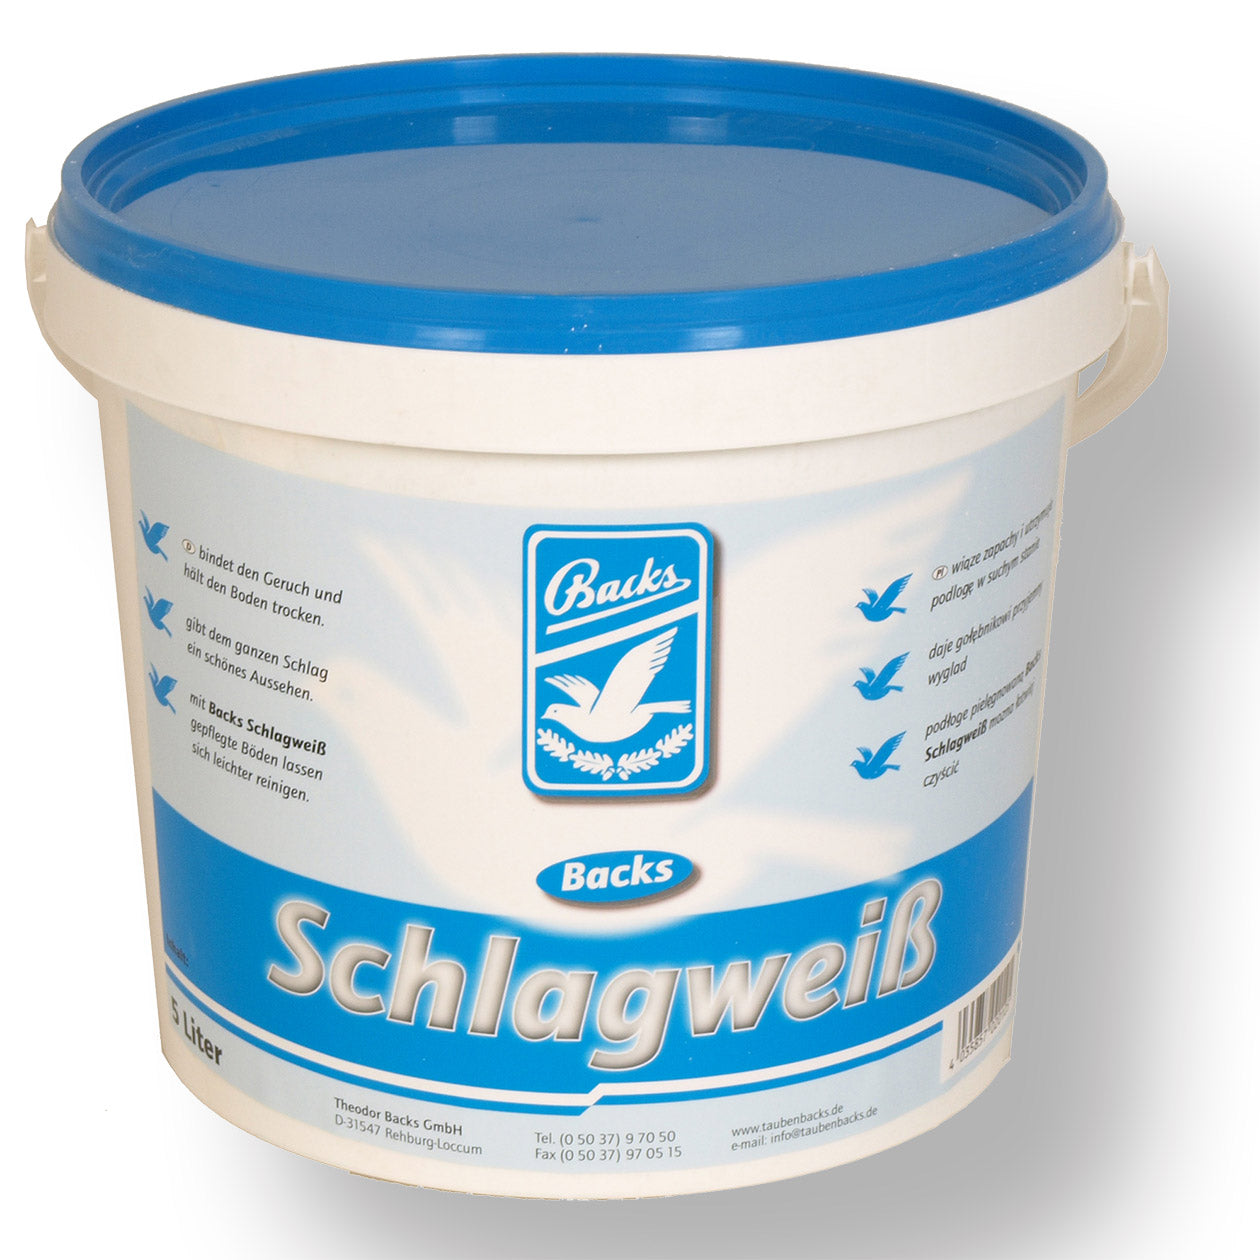 Backs Schlagweiss ("Pigeonry-White") (2.5kg + 10l)